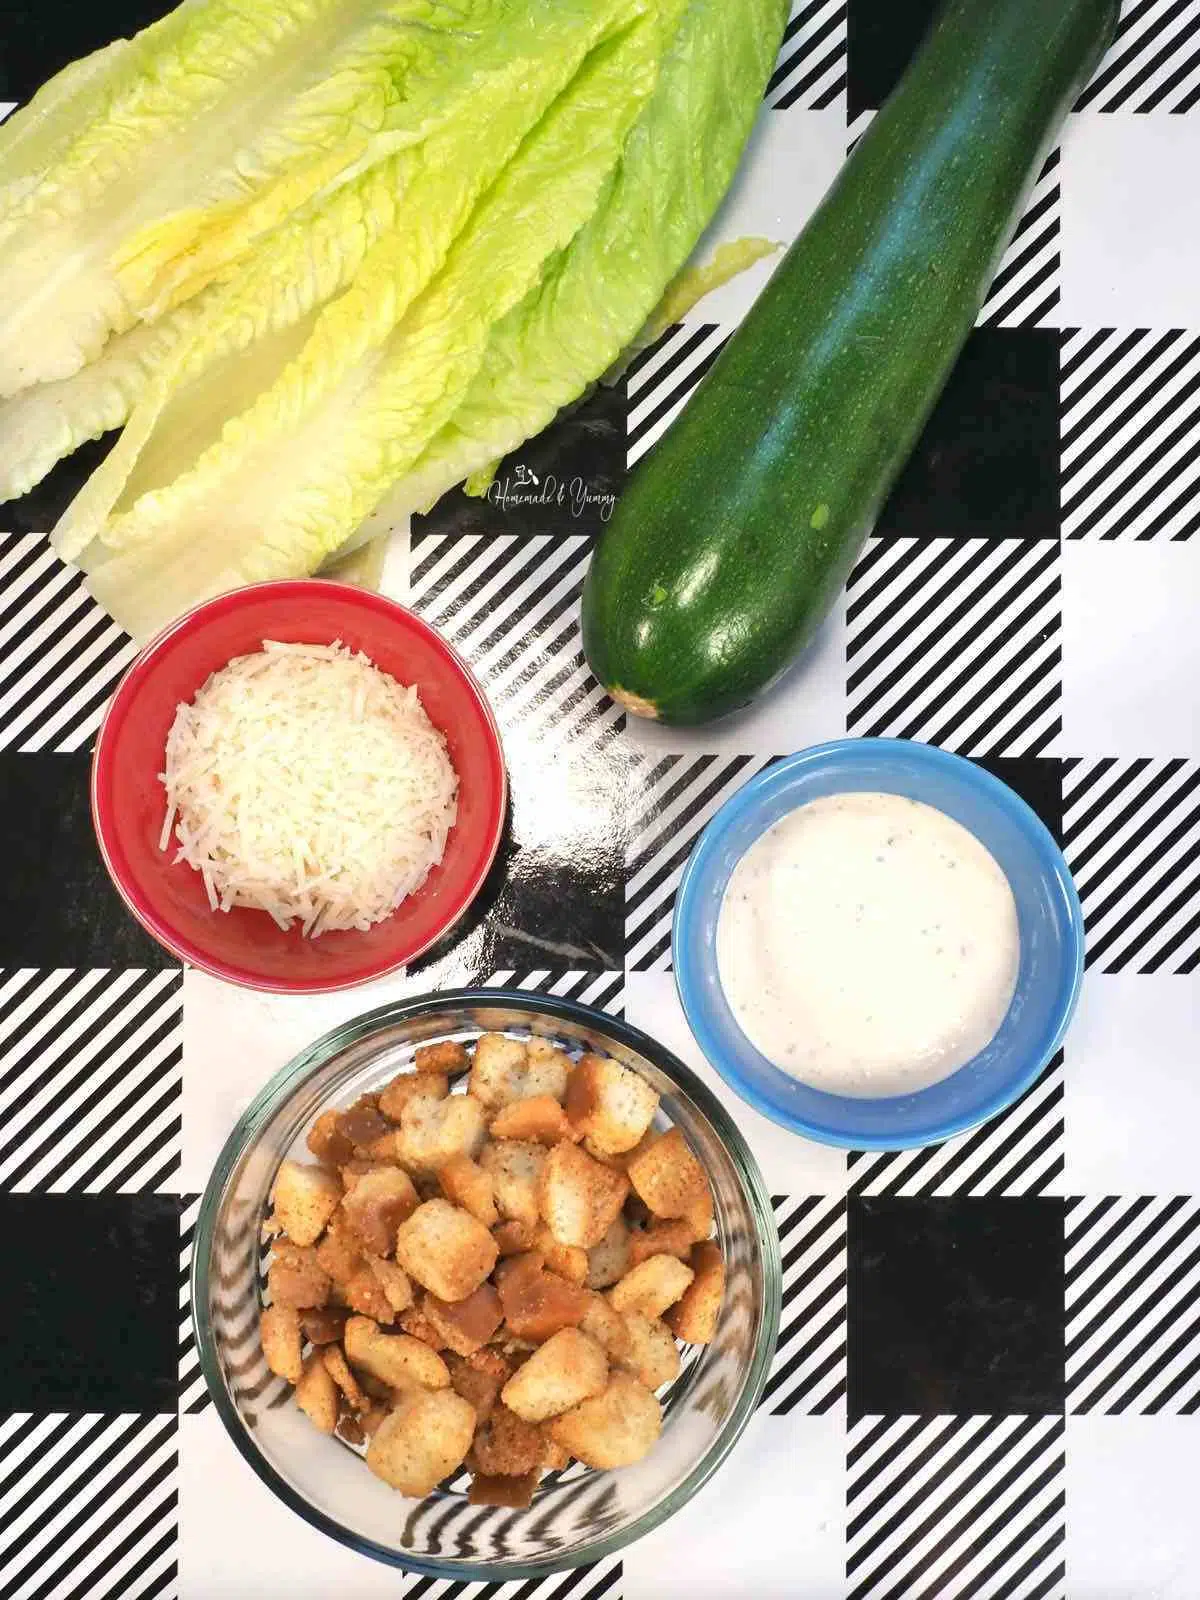 Ingredients to make Caesar salad with zucchini.